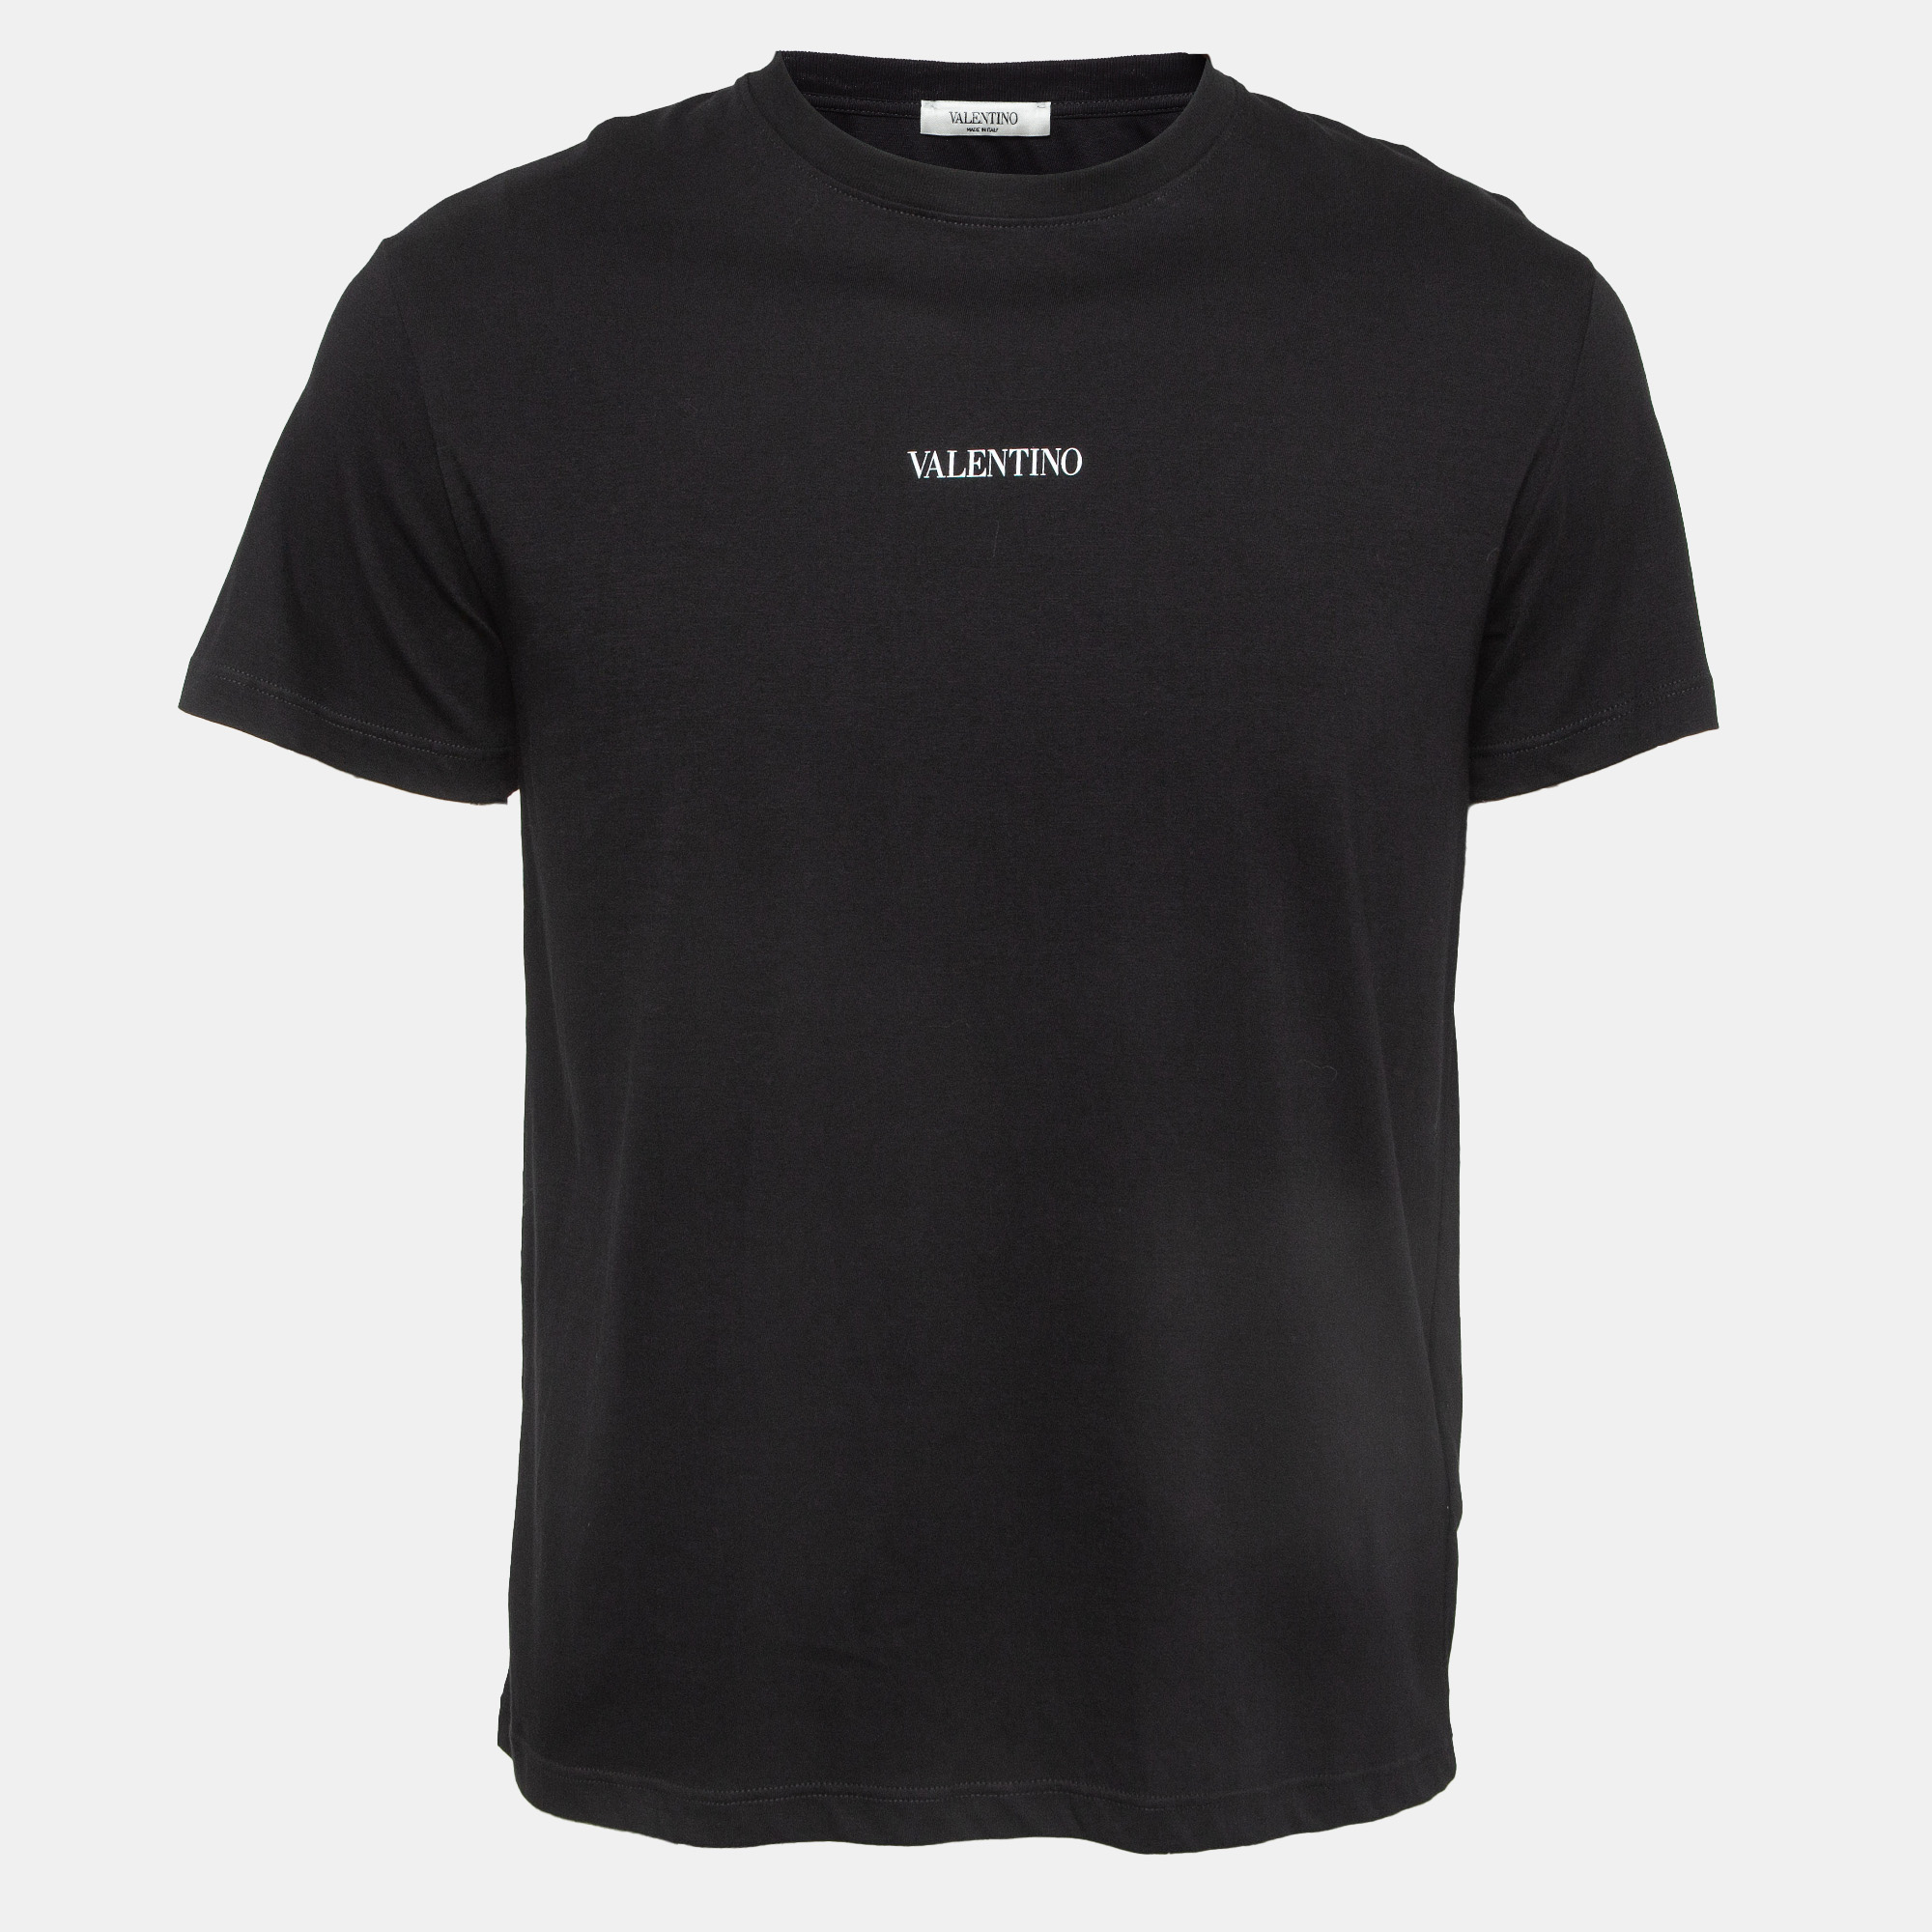 

Valentino Black Printed Cotton Knit Crew Neck T-shirt S